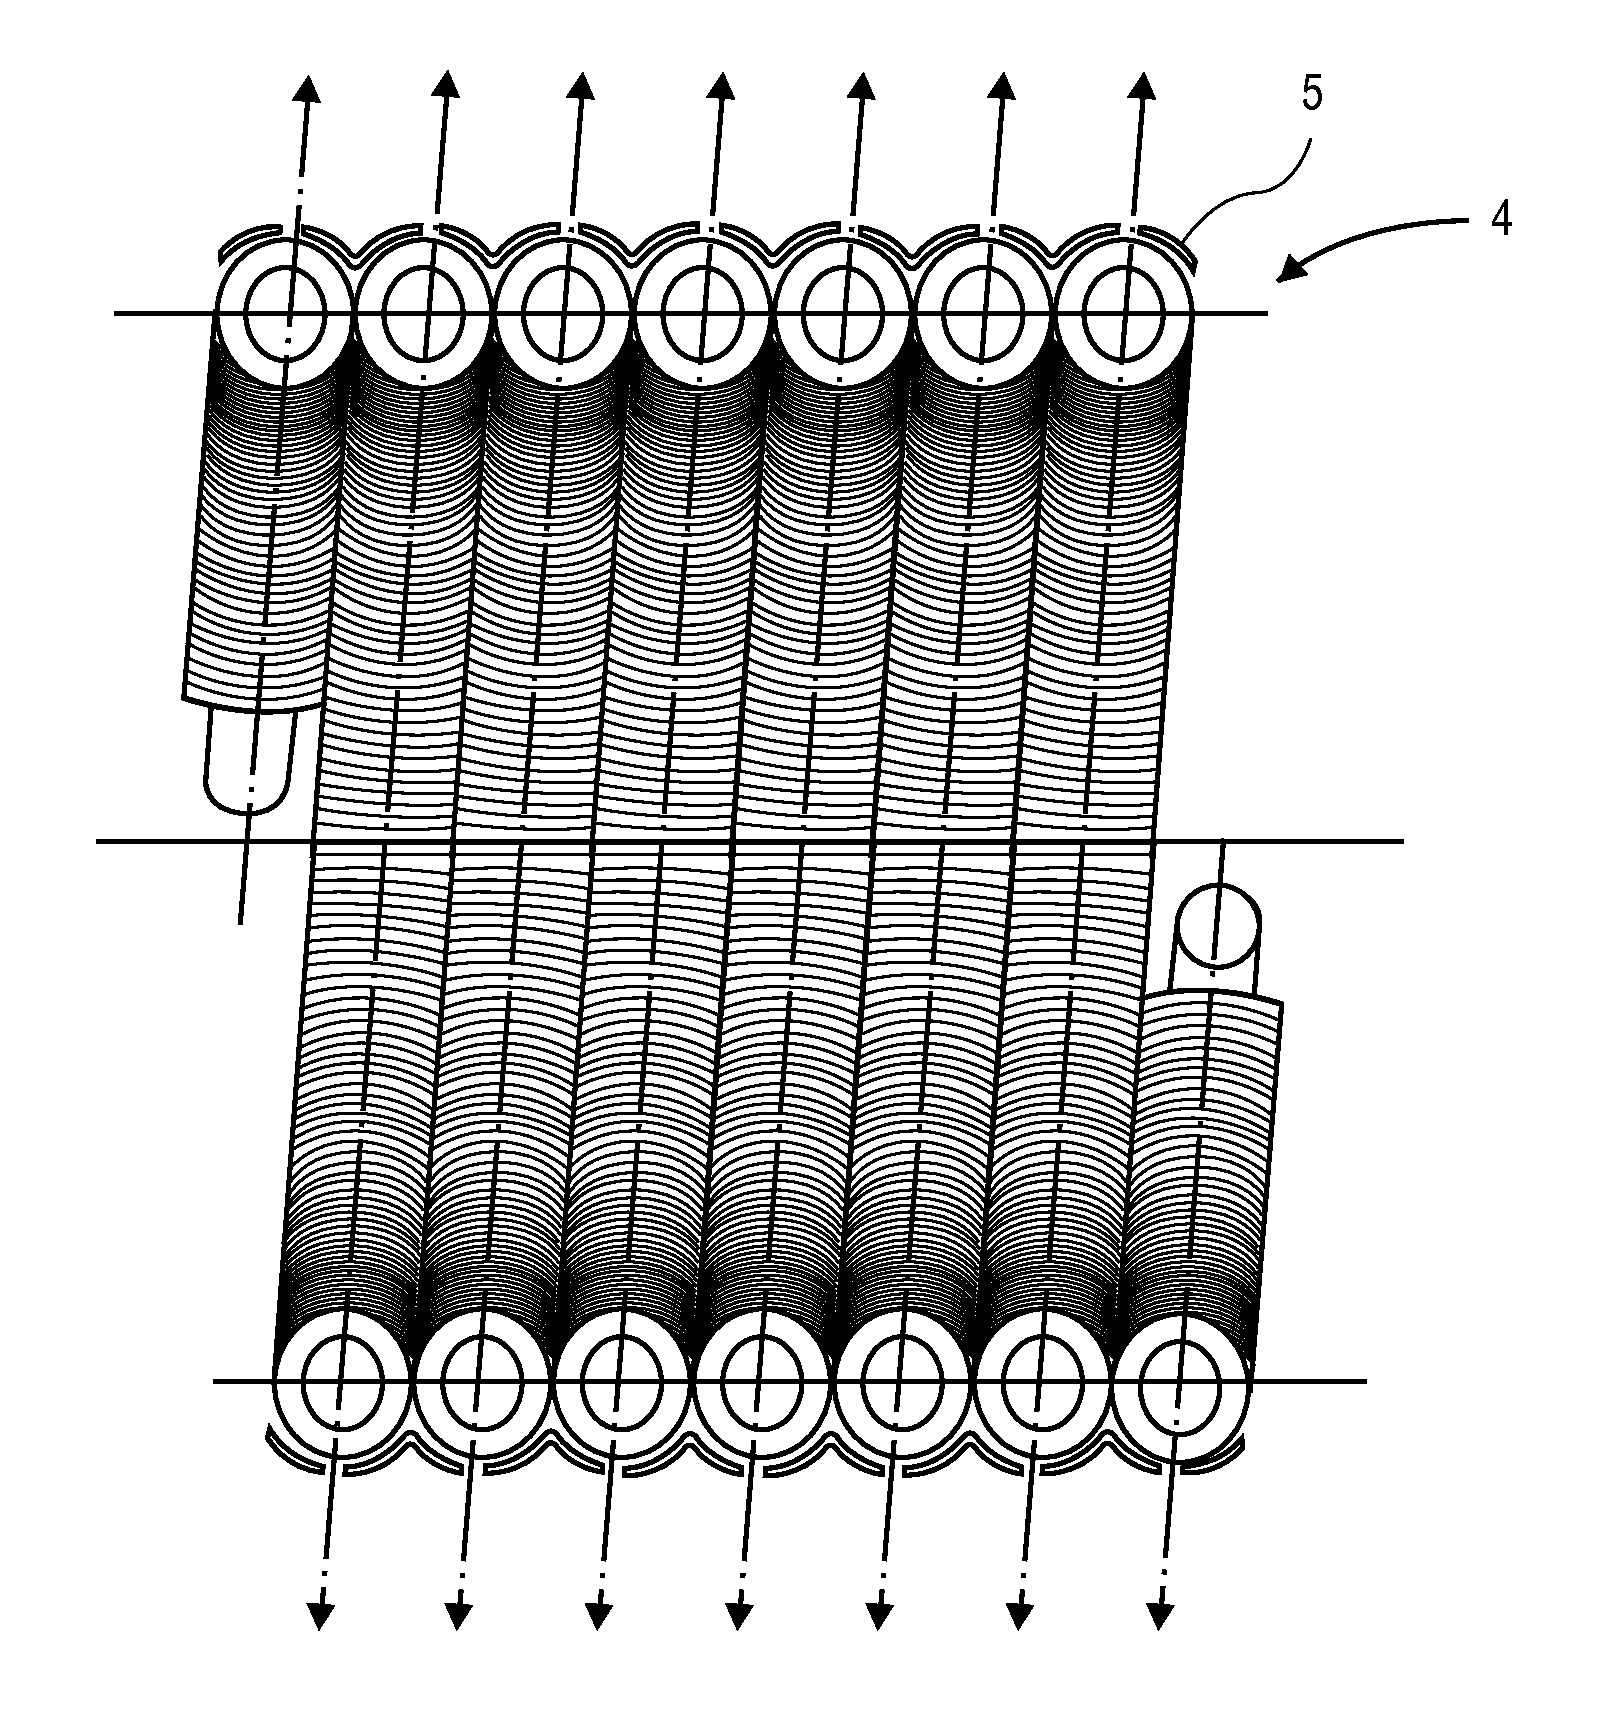 Spiral finned coil condensing heat exchanger